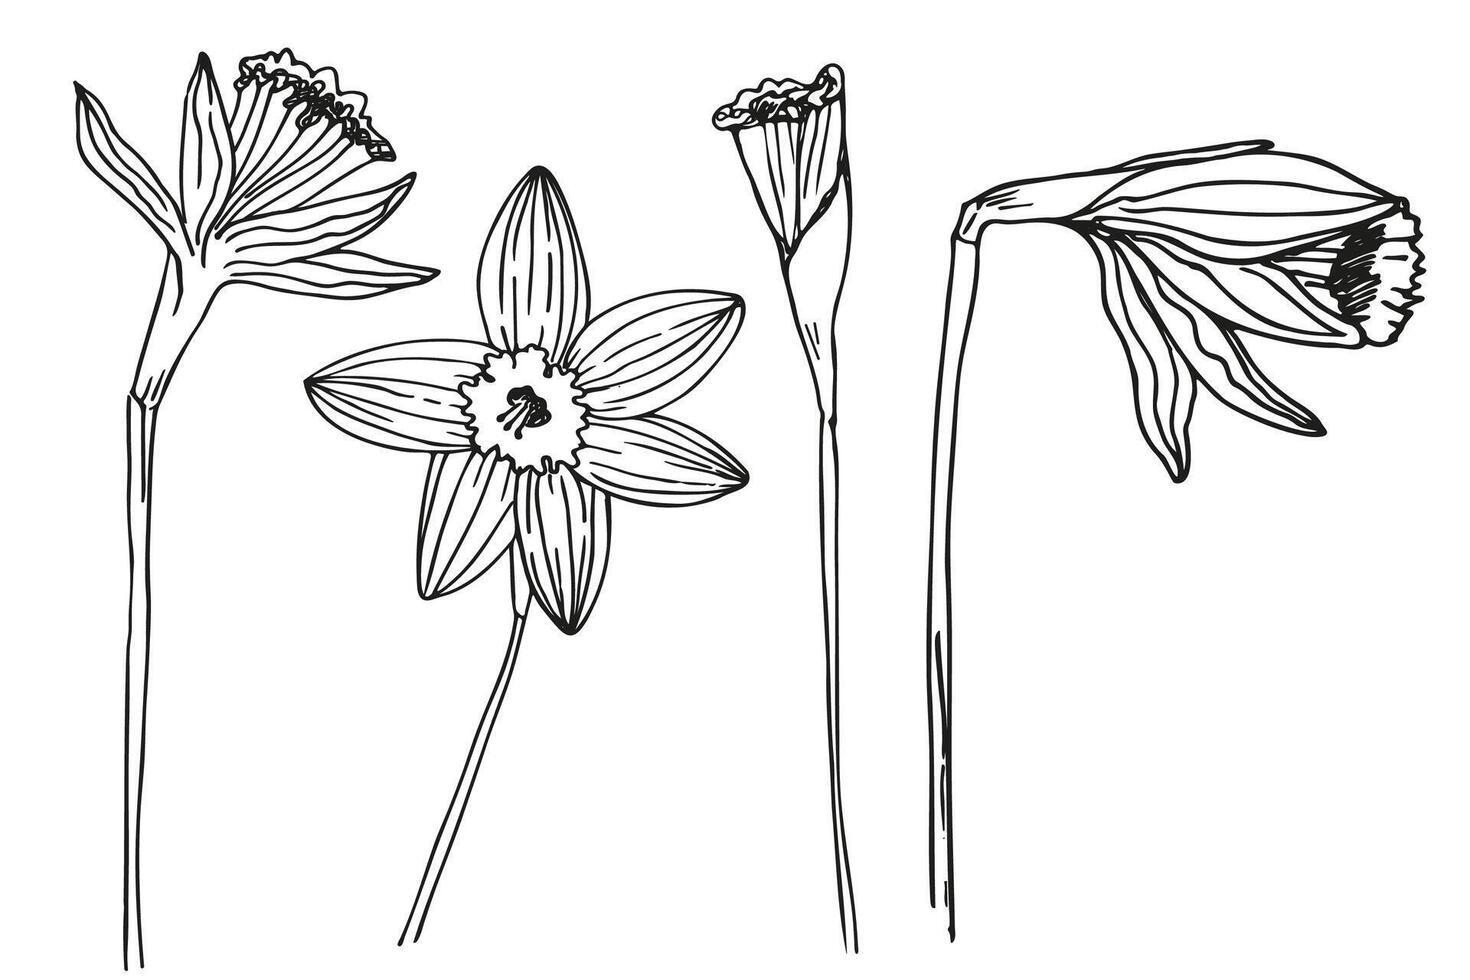 Narcissus flower sketch hand drawn vector illustration. Design background with plants daffodils ink texture, garden floret spring motive for logo, sign, tattoo, label, flyer, print, paper, card